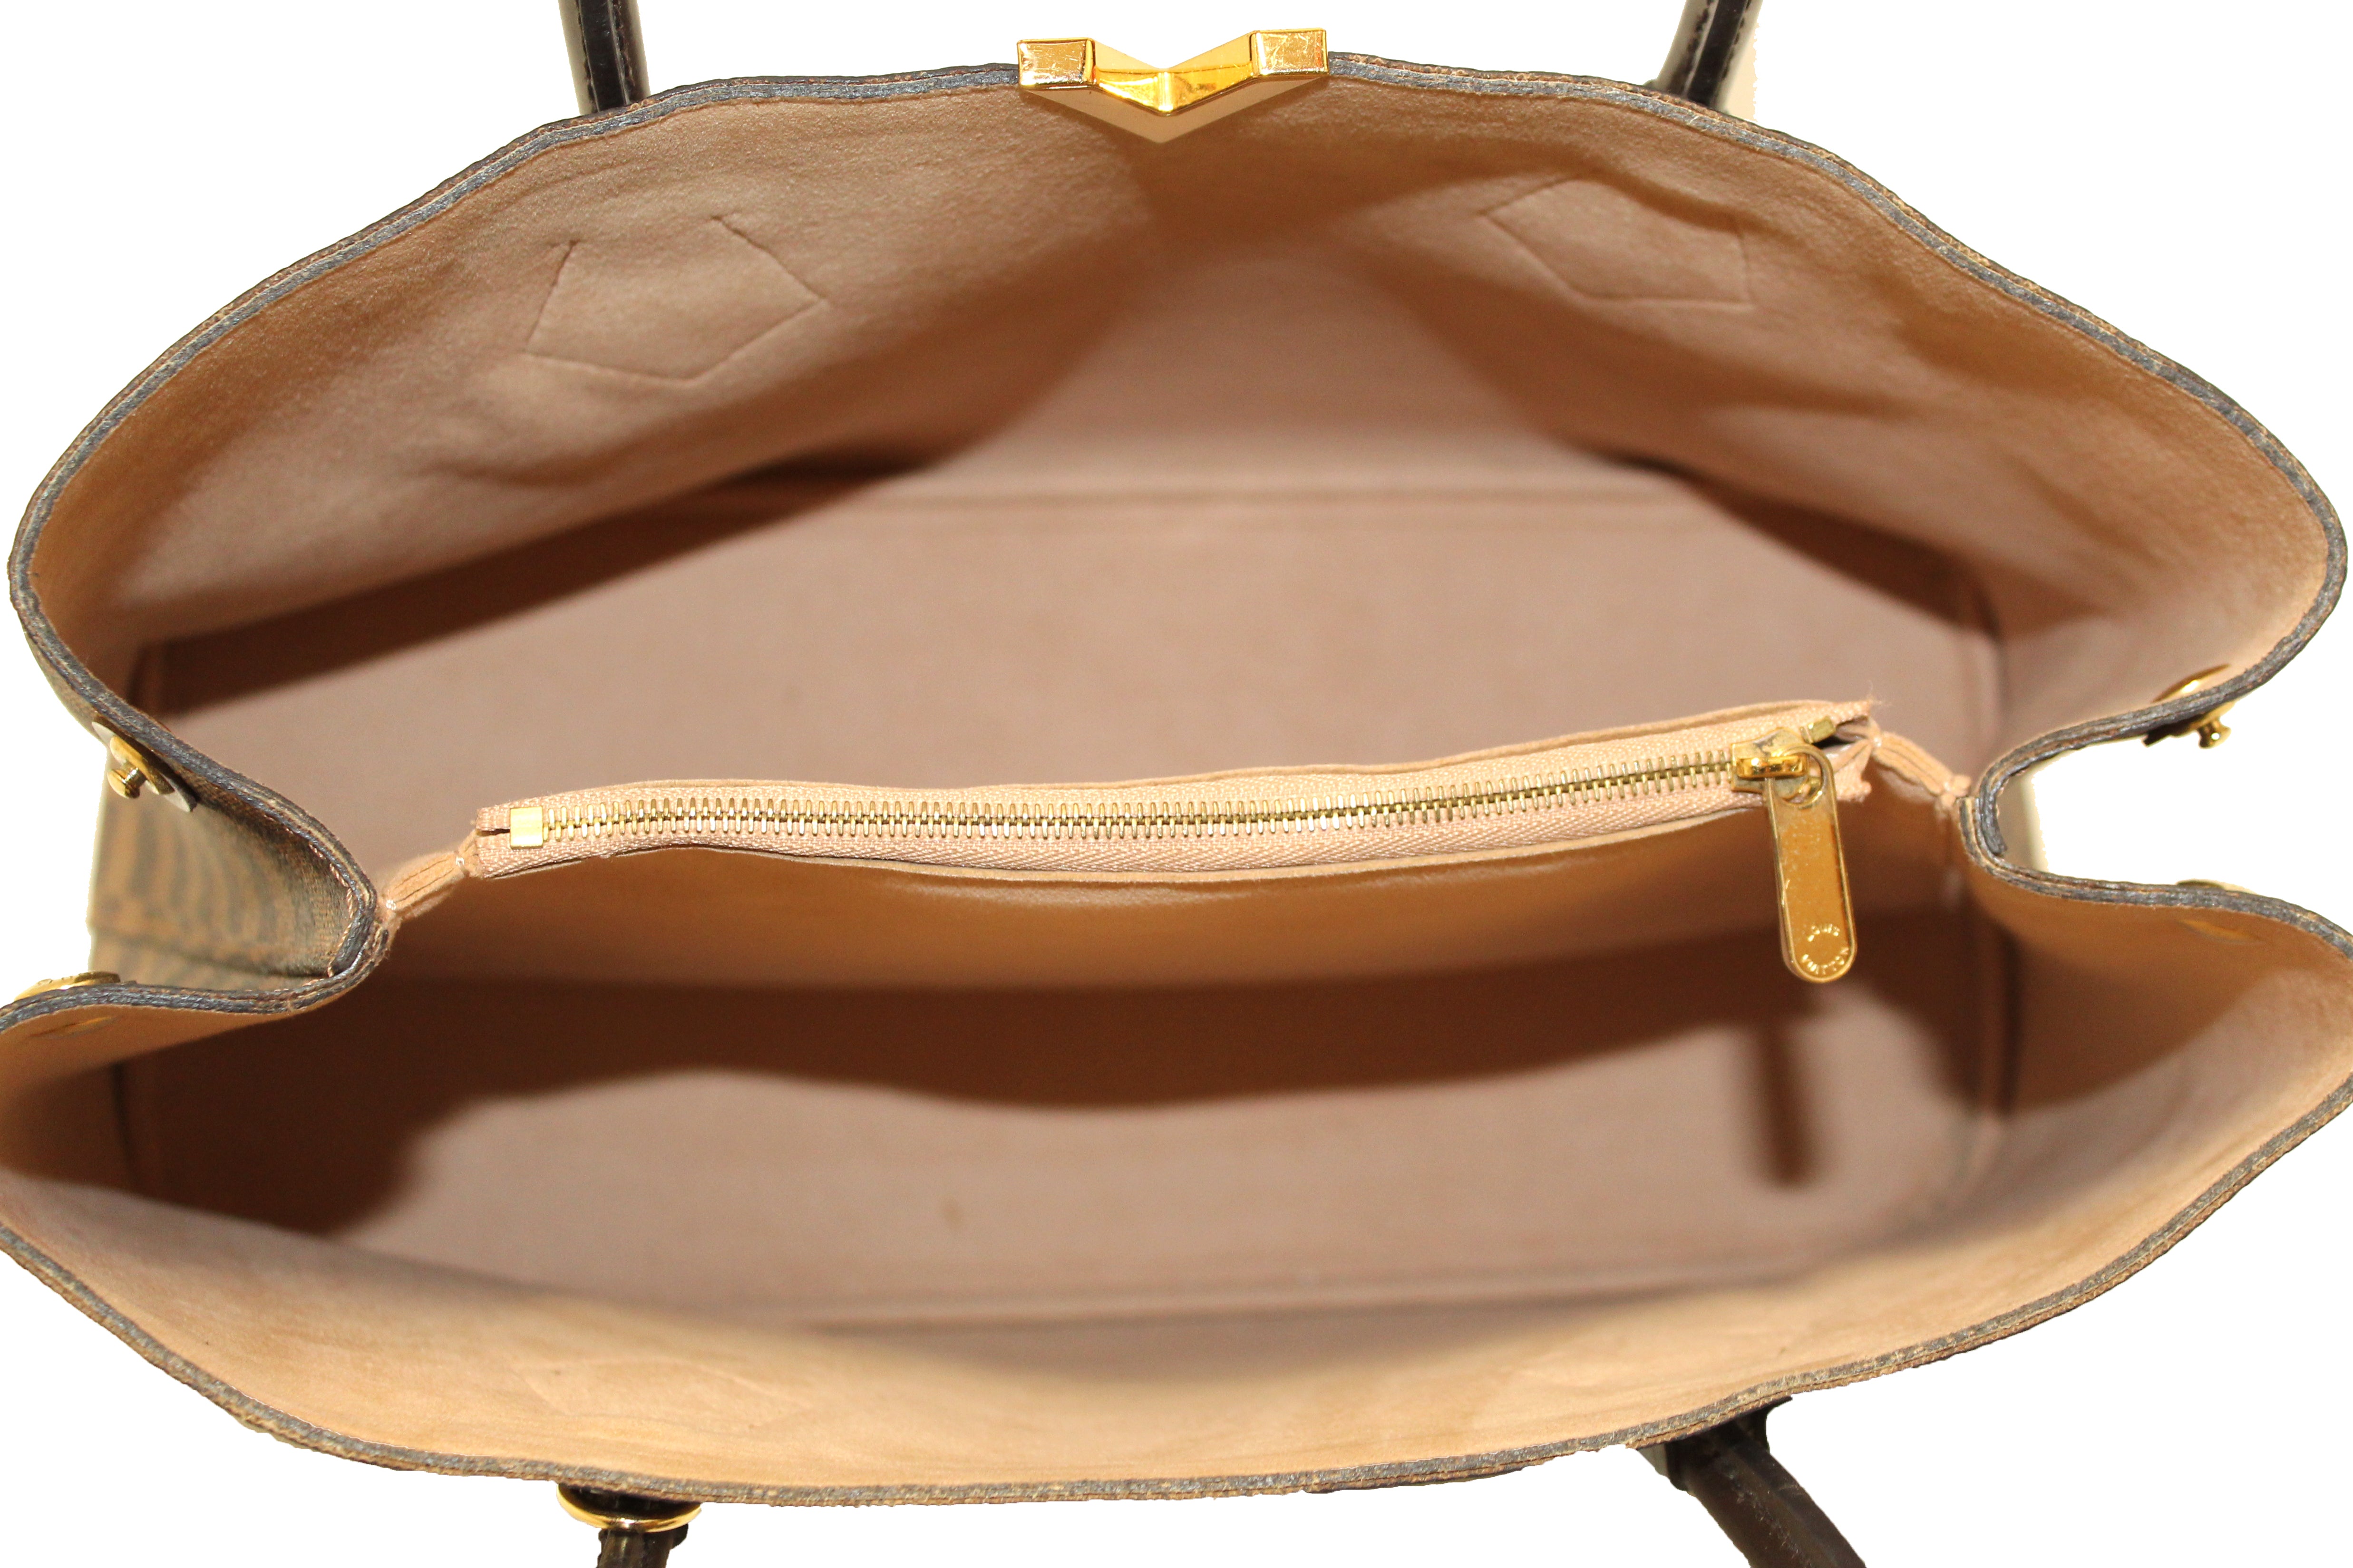 Louis Vuitton Damier Ebene Kensington - Brown Totes, Handbags